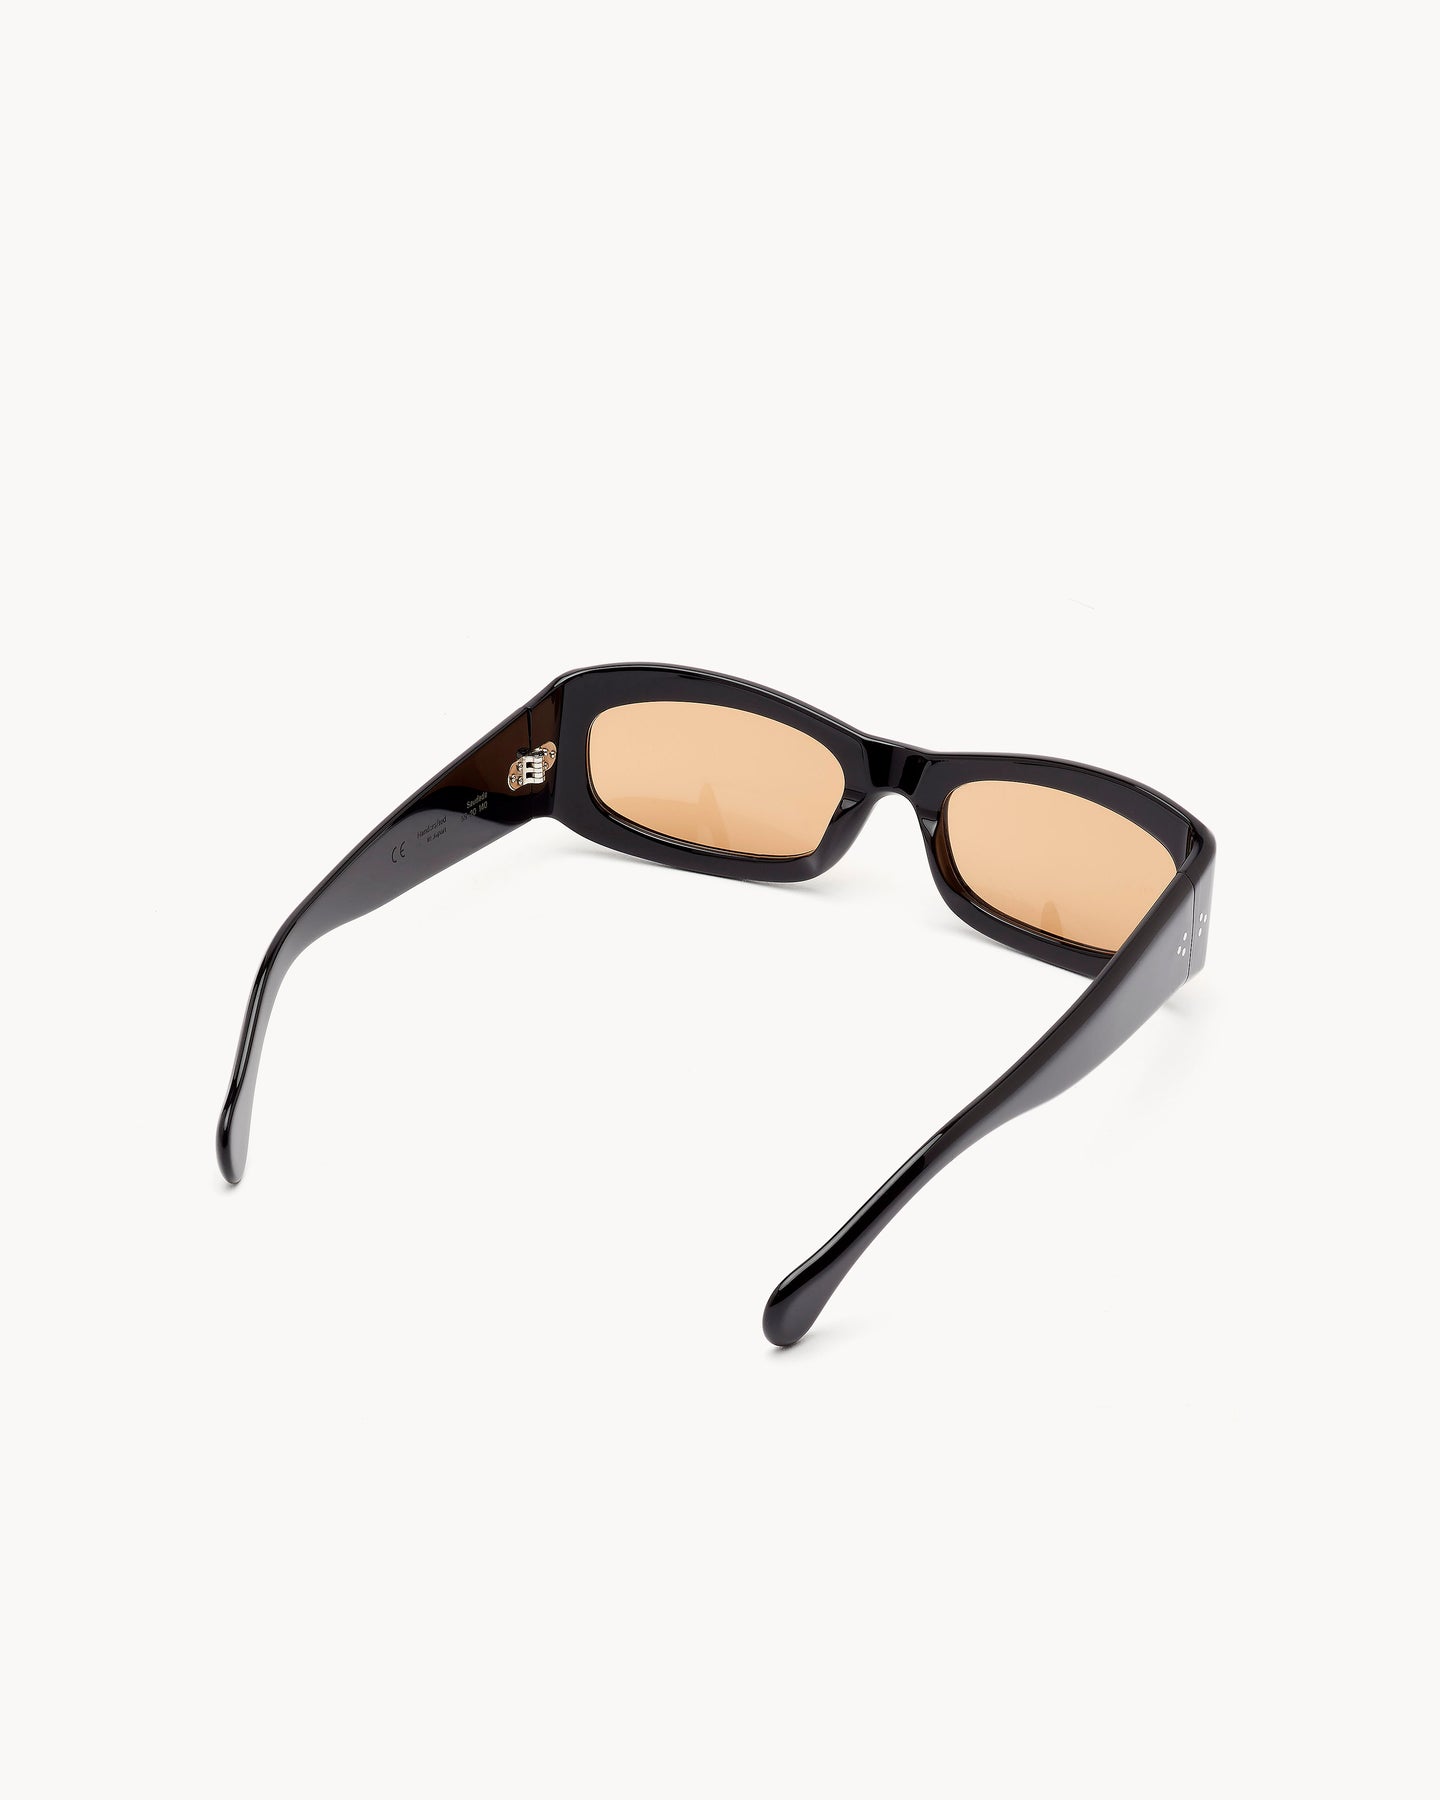 Port Tanger Saudade Sunglasses in Black Acetate and Cognac Lenses 3